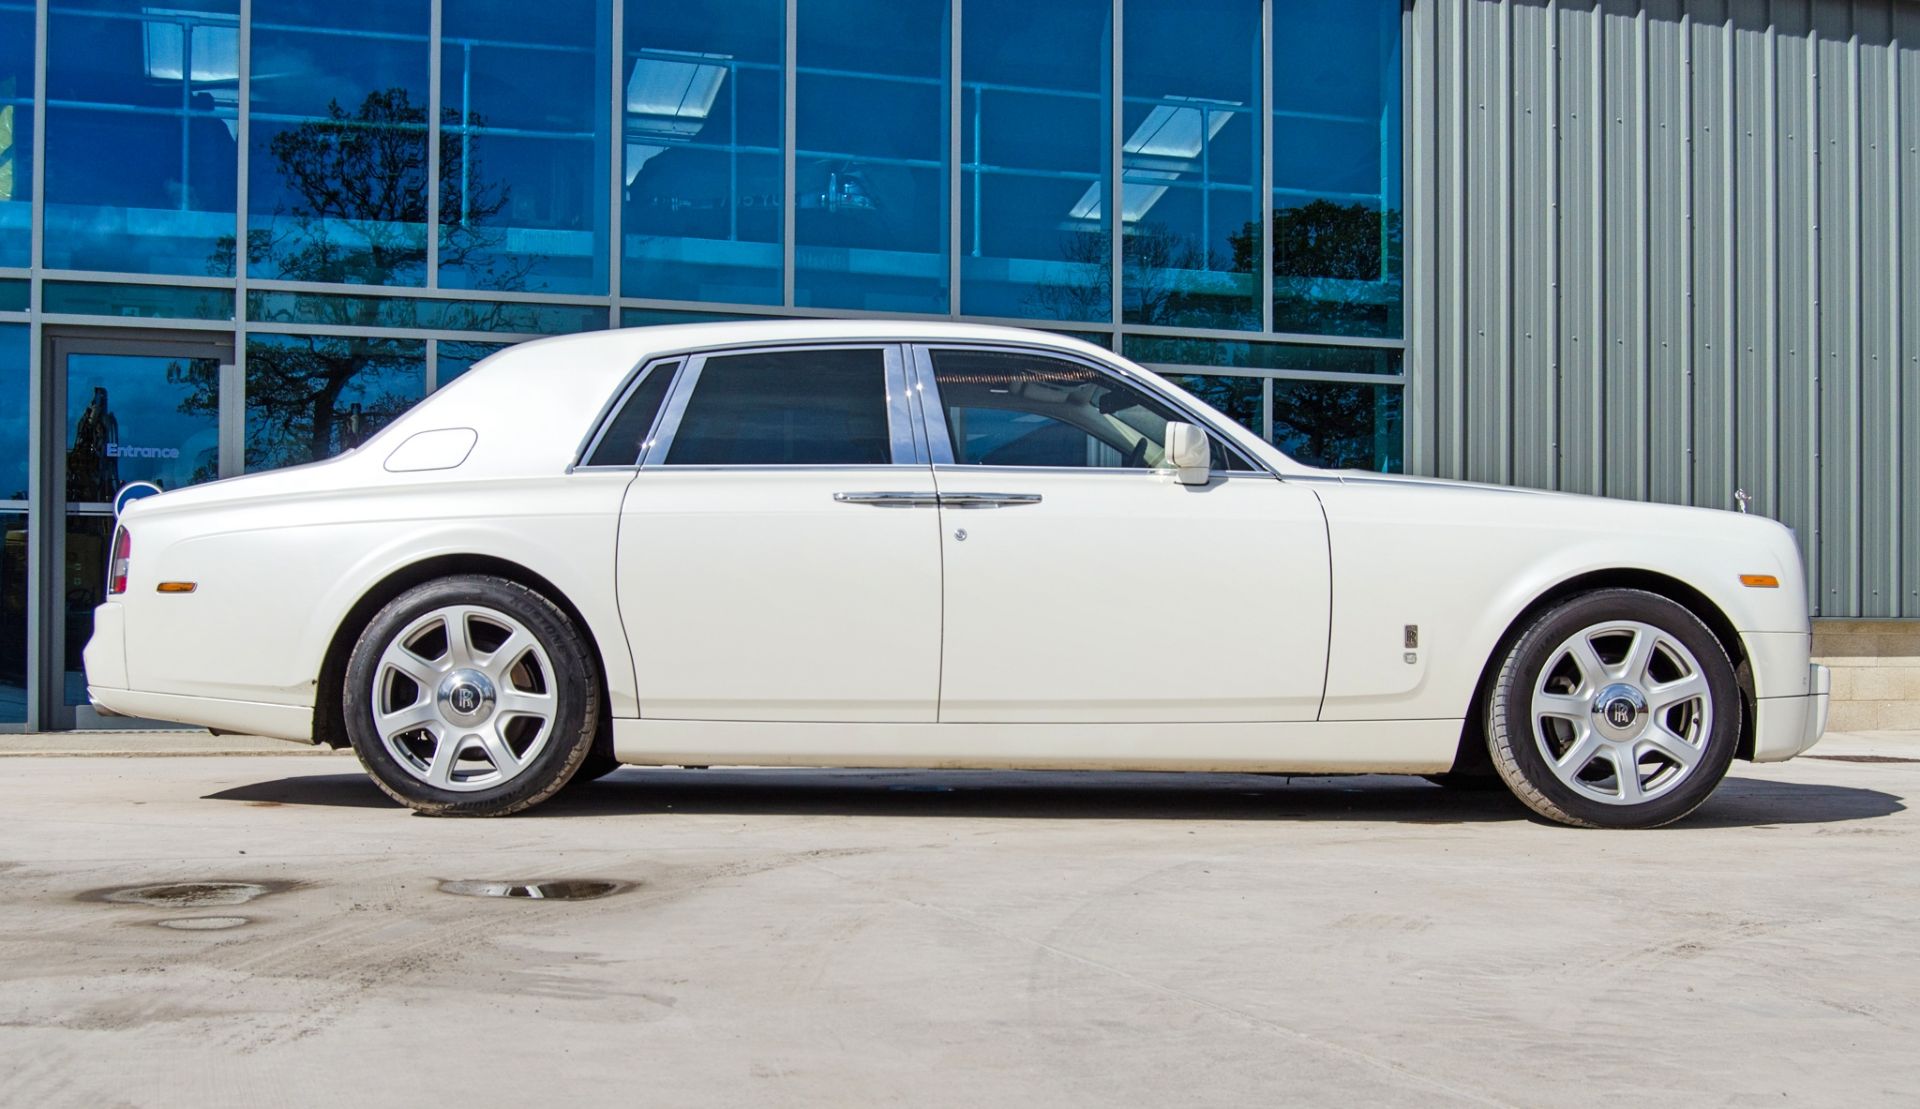 2009 Rolls Royce Phantom 6749cc V12 Auto 4 door saloon car - Image 13 of 54